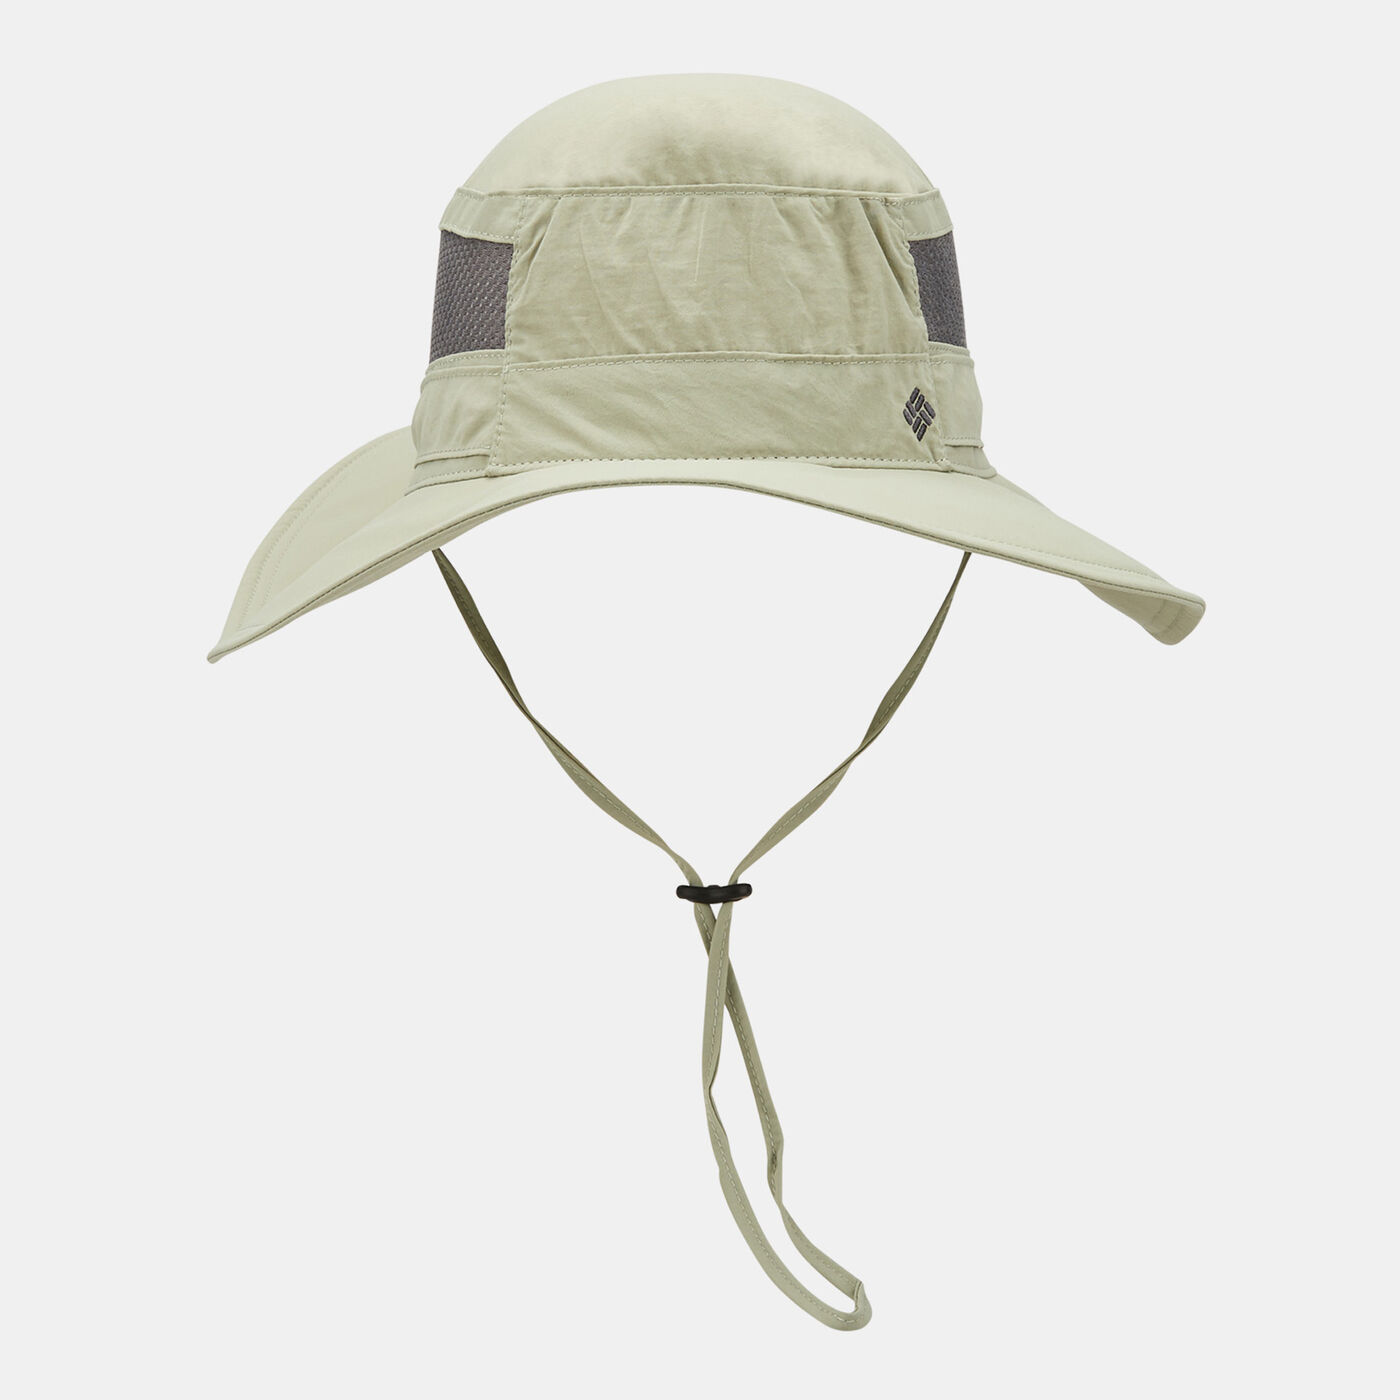 Bora Bora™ II Booney Hat